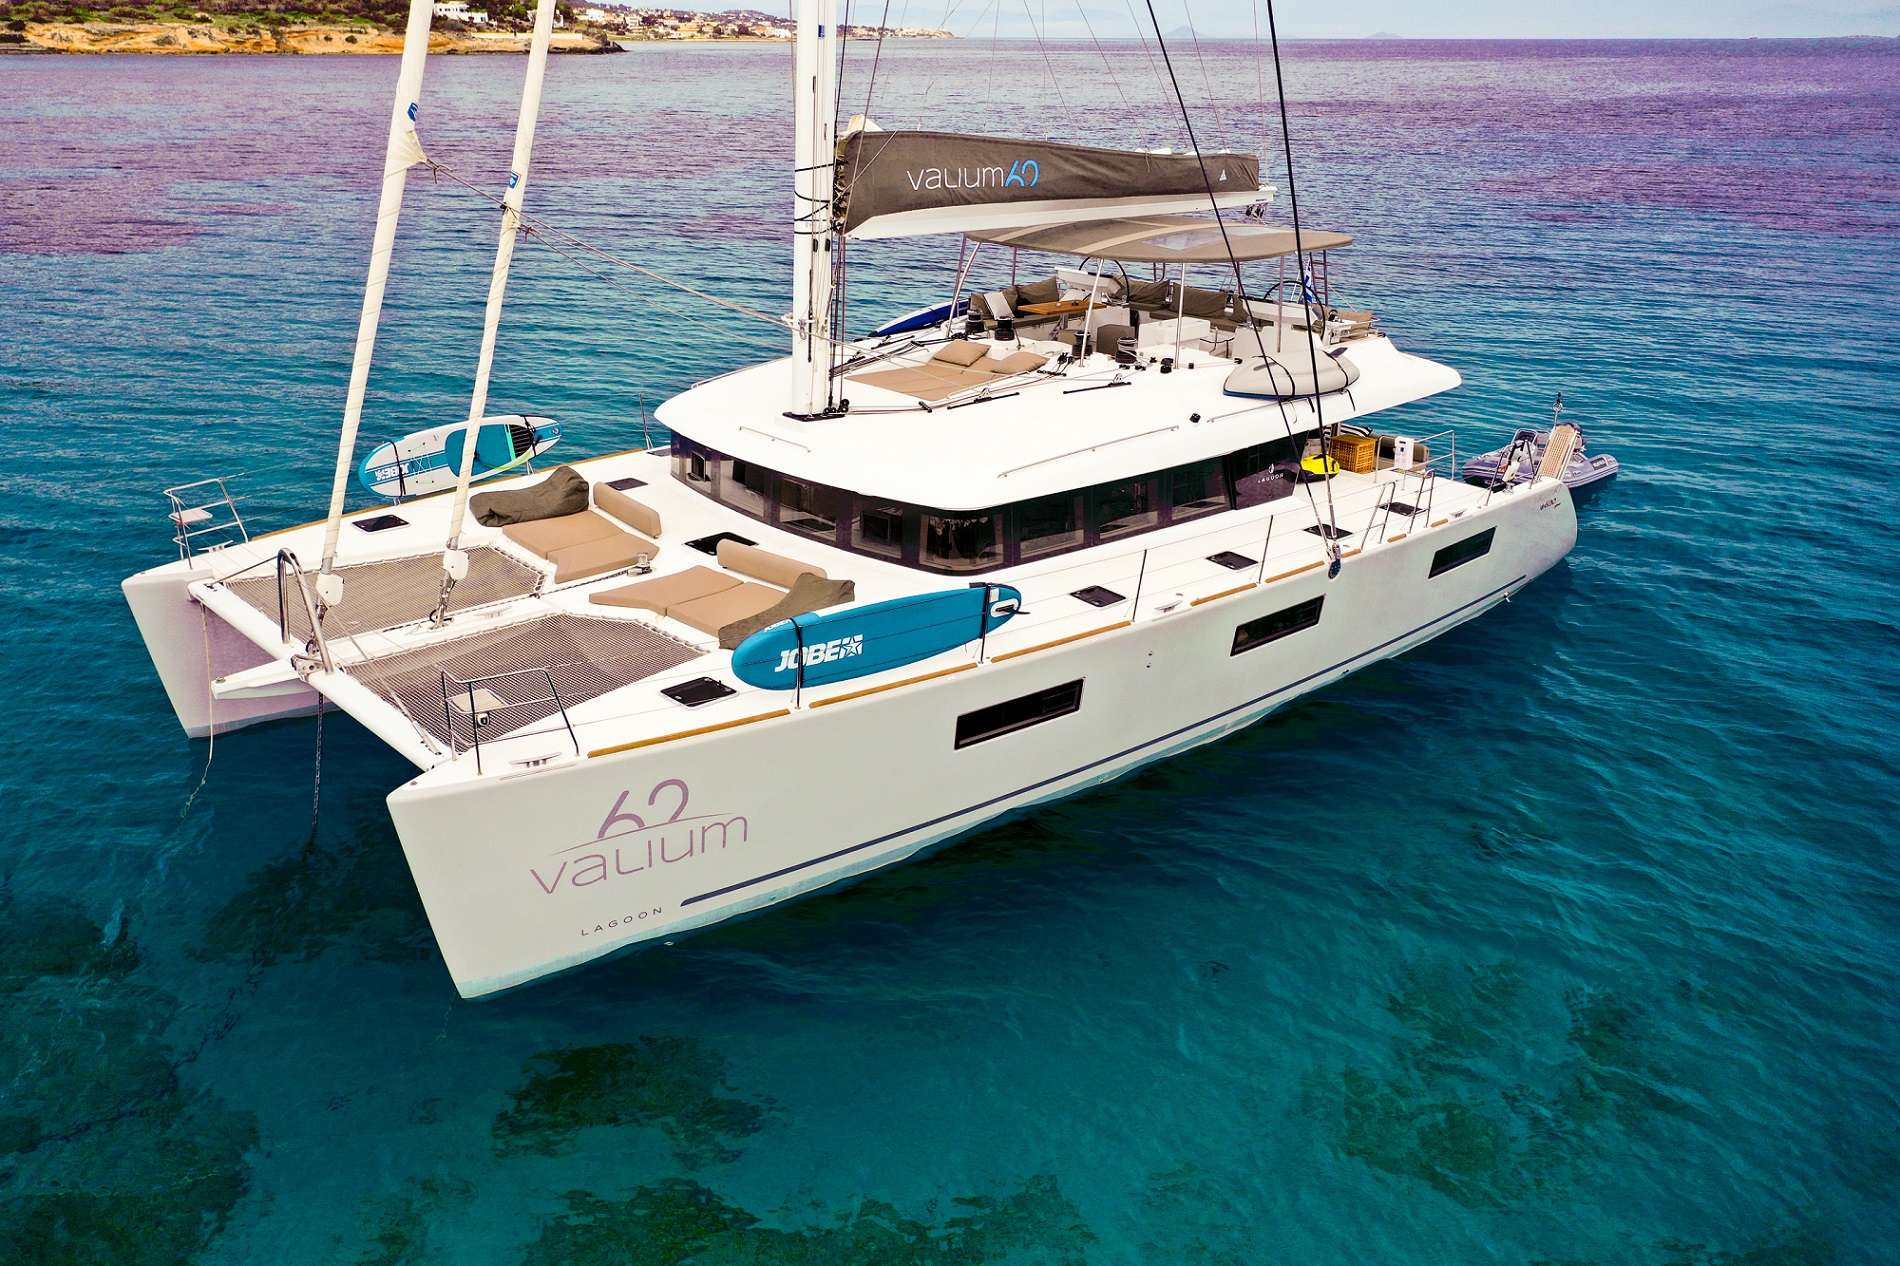 valium62 - Yacht Charter Palaio Faliro & Boat hire in Greece 2